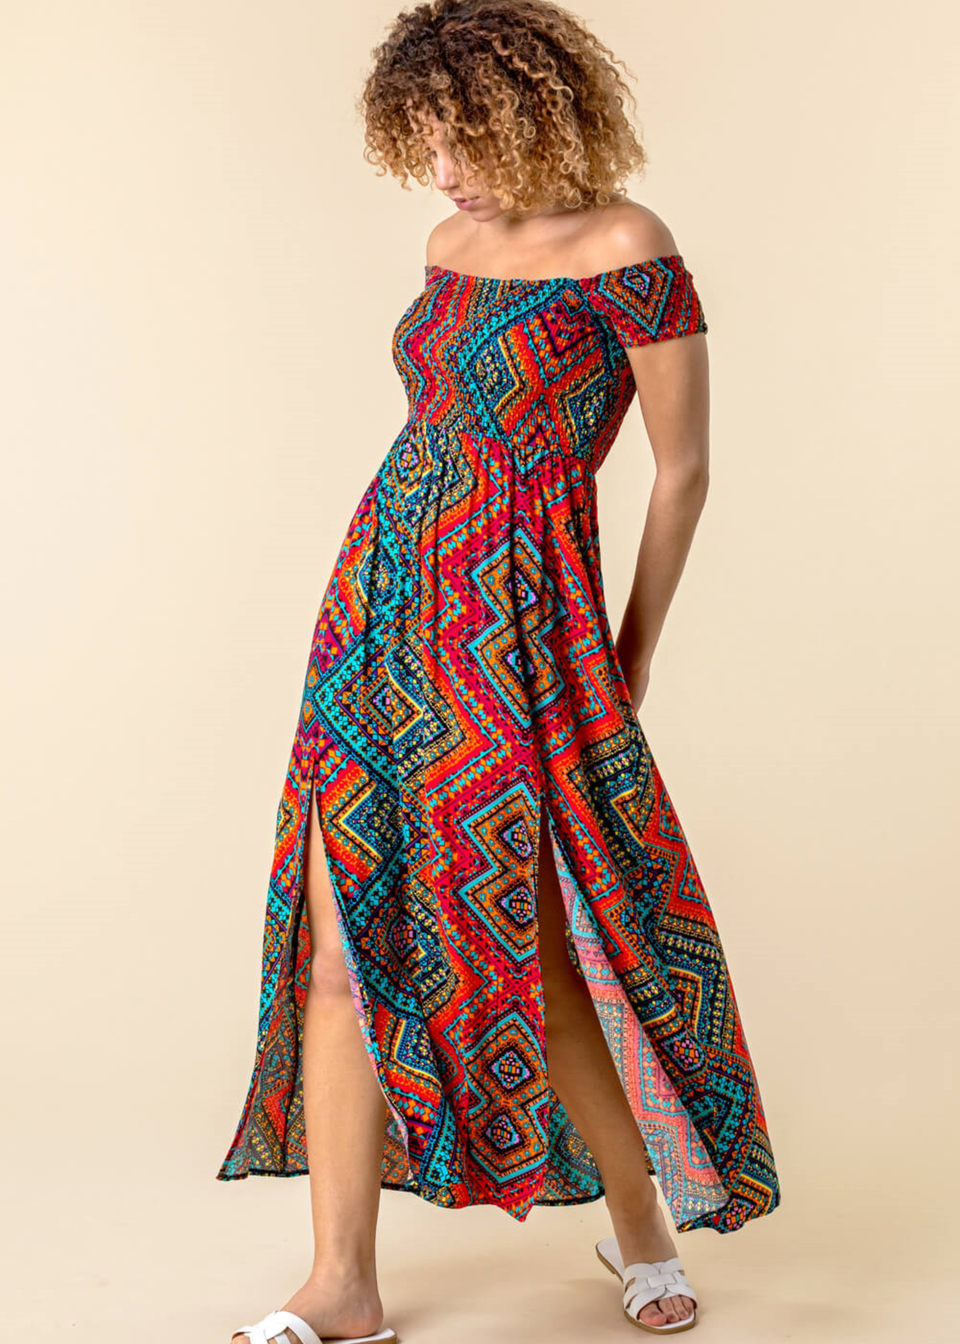 Roman Multi Shirred Aztec Print Bardot Dress - Matalan